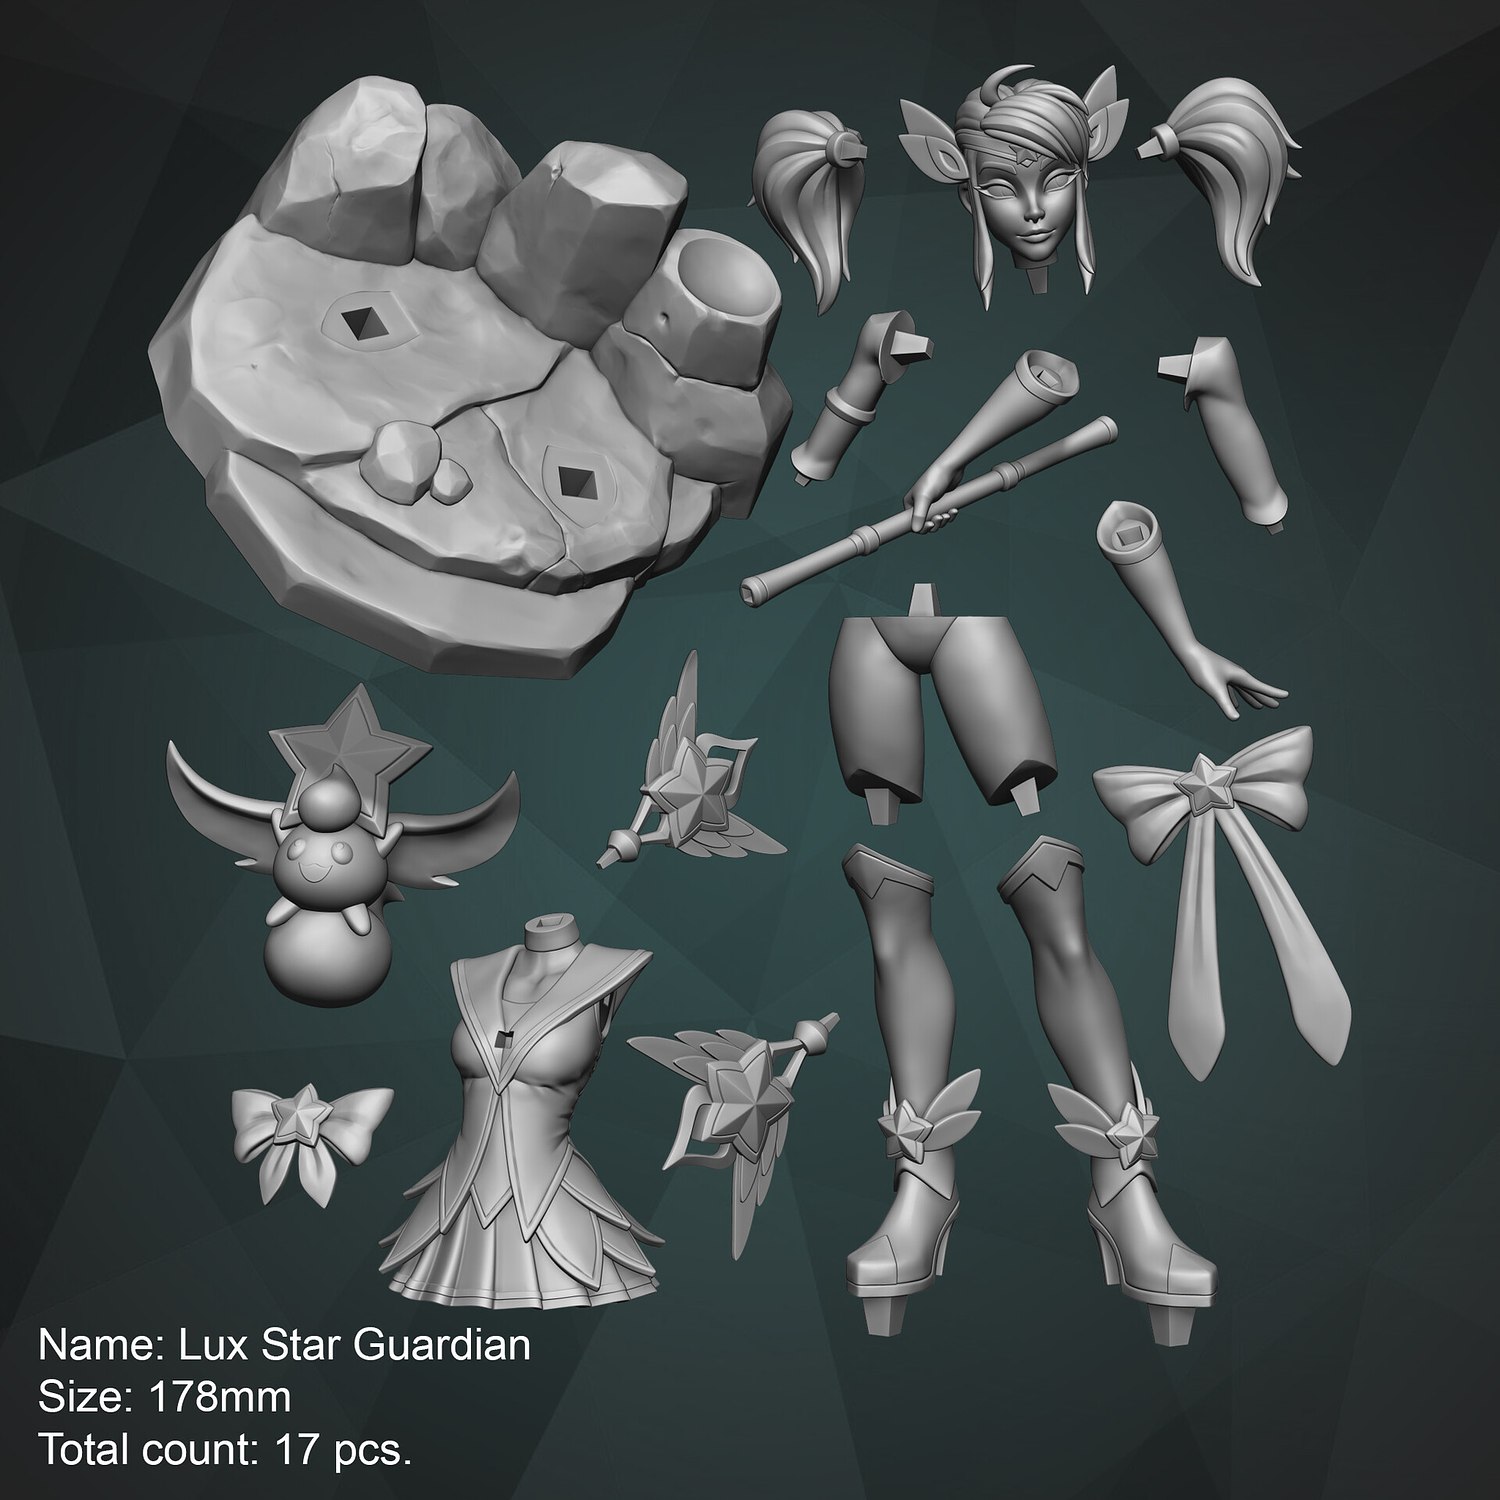 Lux Star Guardian Skin Stylized From League of Legends